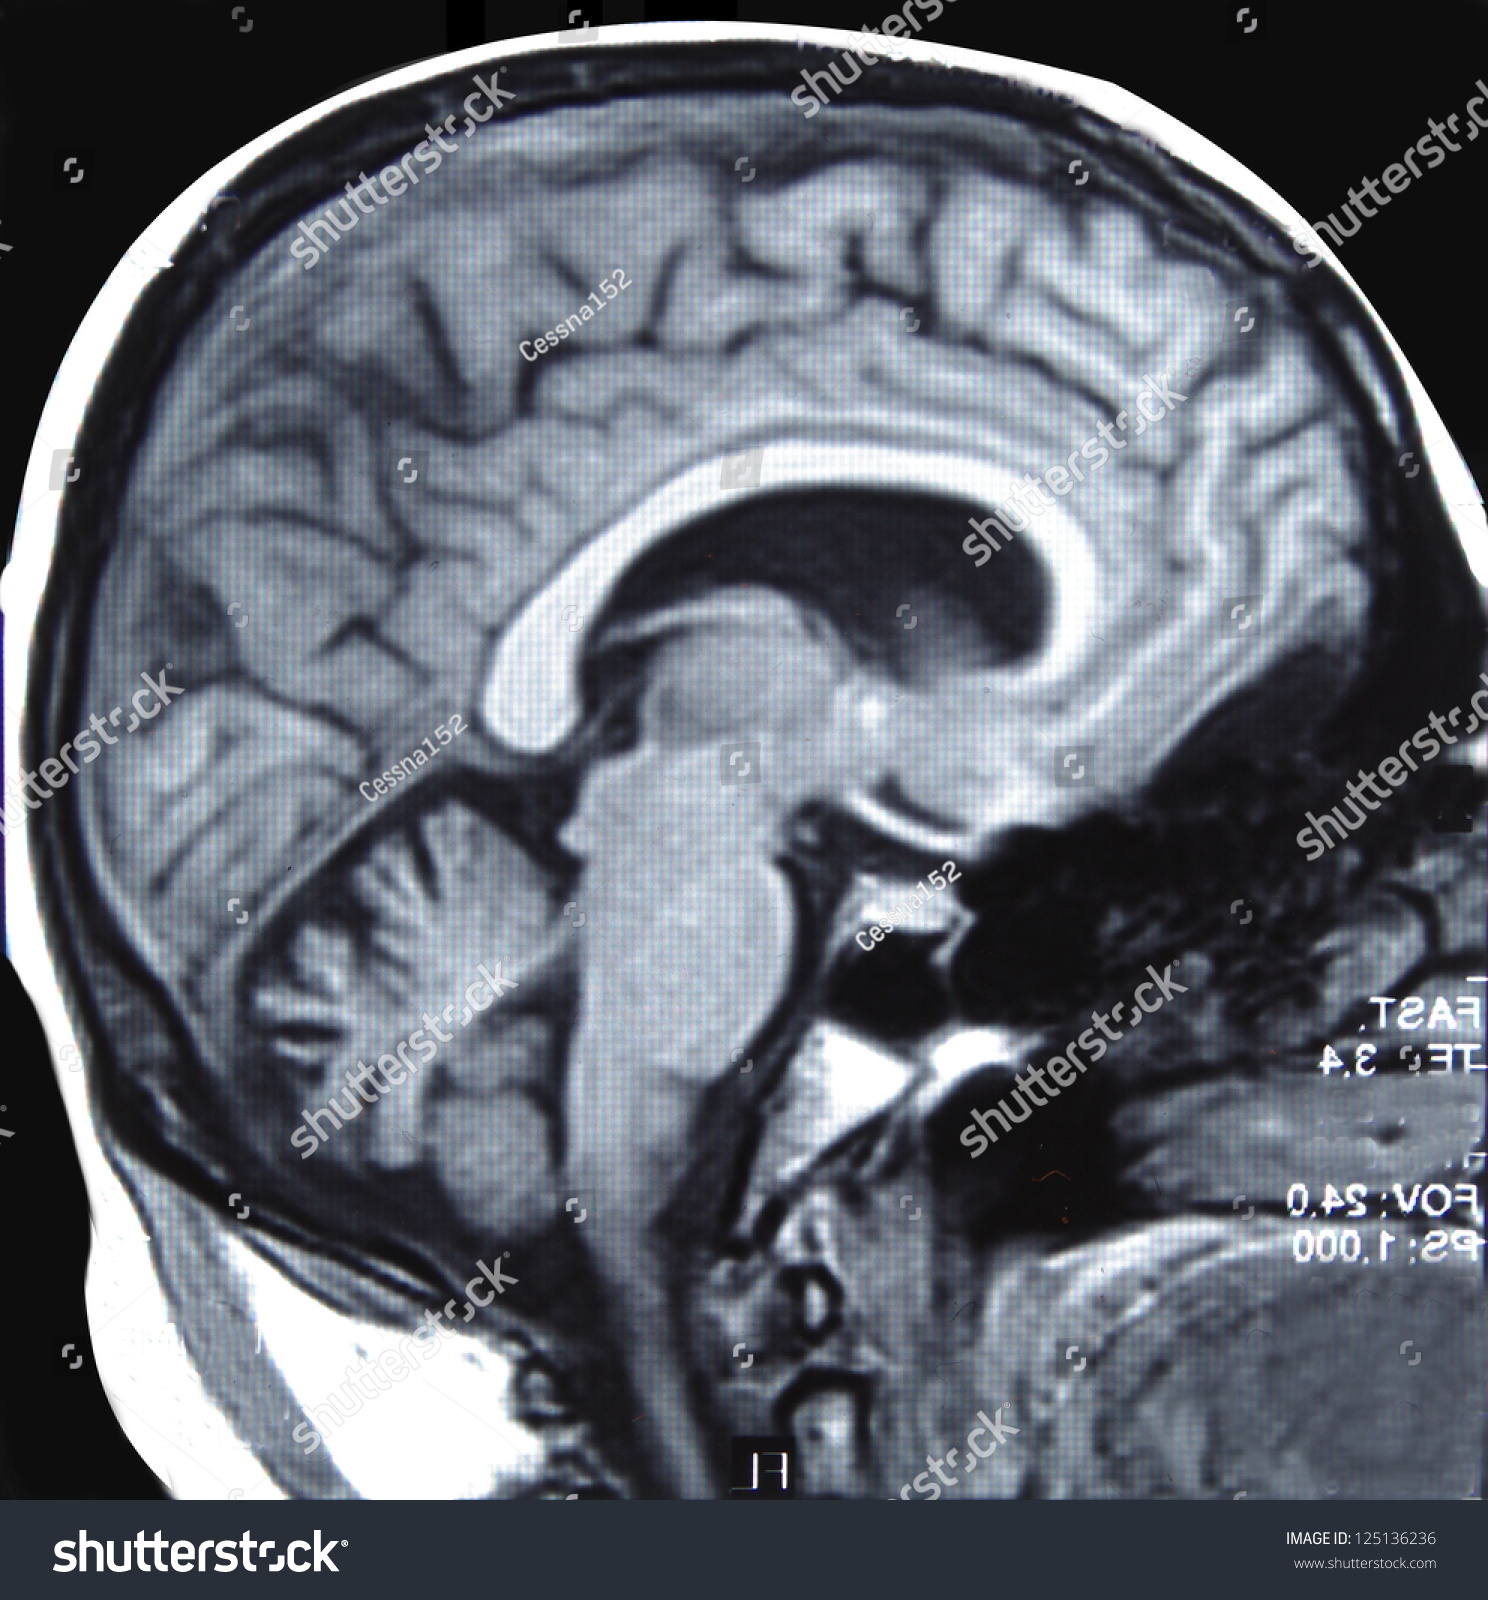 Magnetic Resonance Imaging ( Mri ) Of The Head And Brain Stock Photo ...